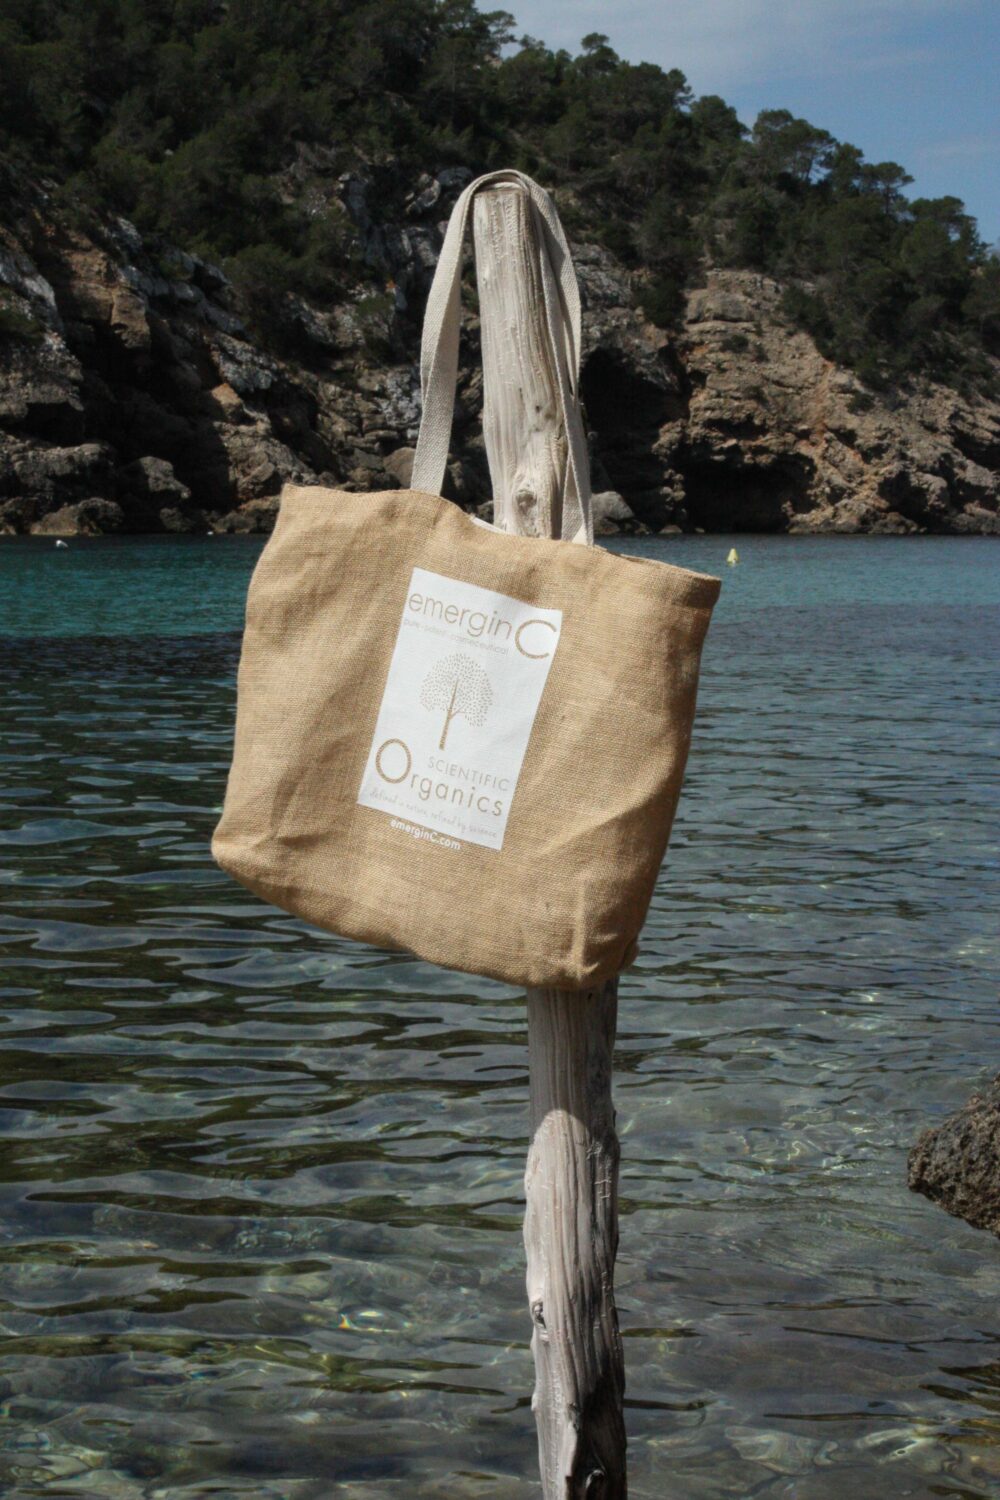 emerginC Scientific Organics bag hangs from wooden pole in beautiful bay in Ibiza